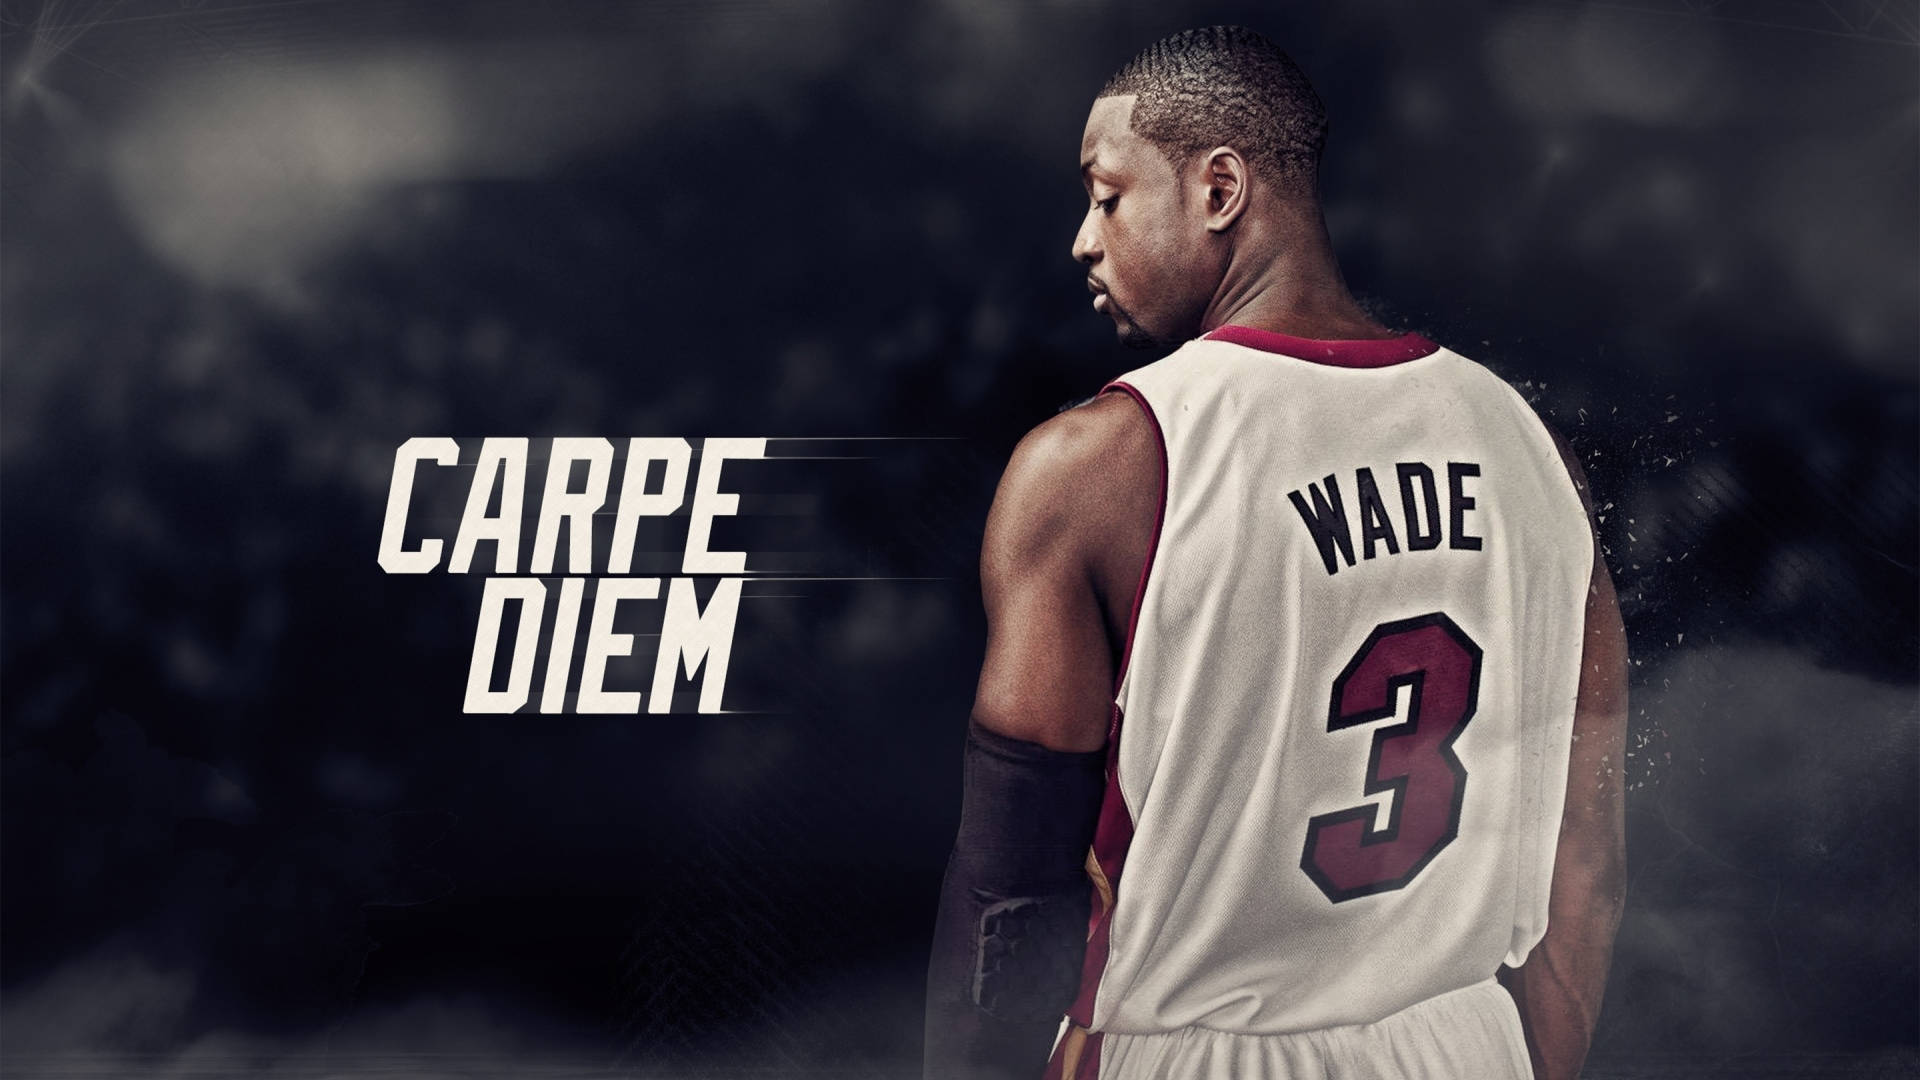 Miami Heat Player Dwayne Wade